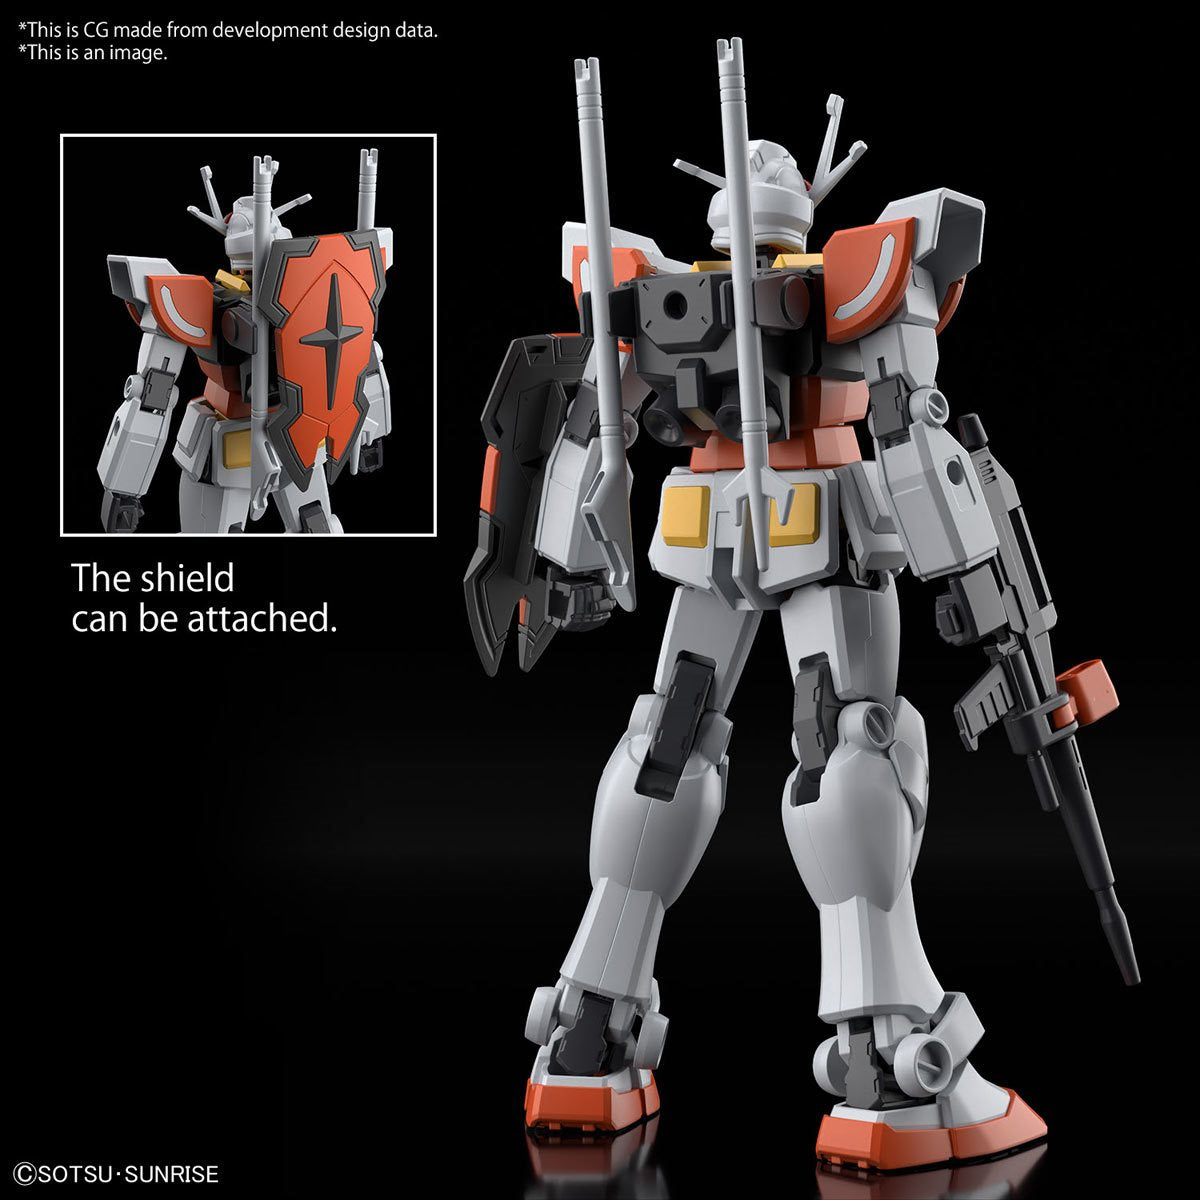 Bandai Hobby Gunpla Entry Grade Model Kit: Gundam Build Metaverse - Lah Gundam Escala 1/144 Kit De Plastico